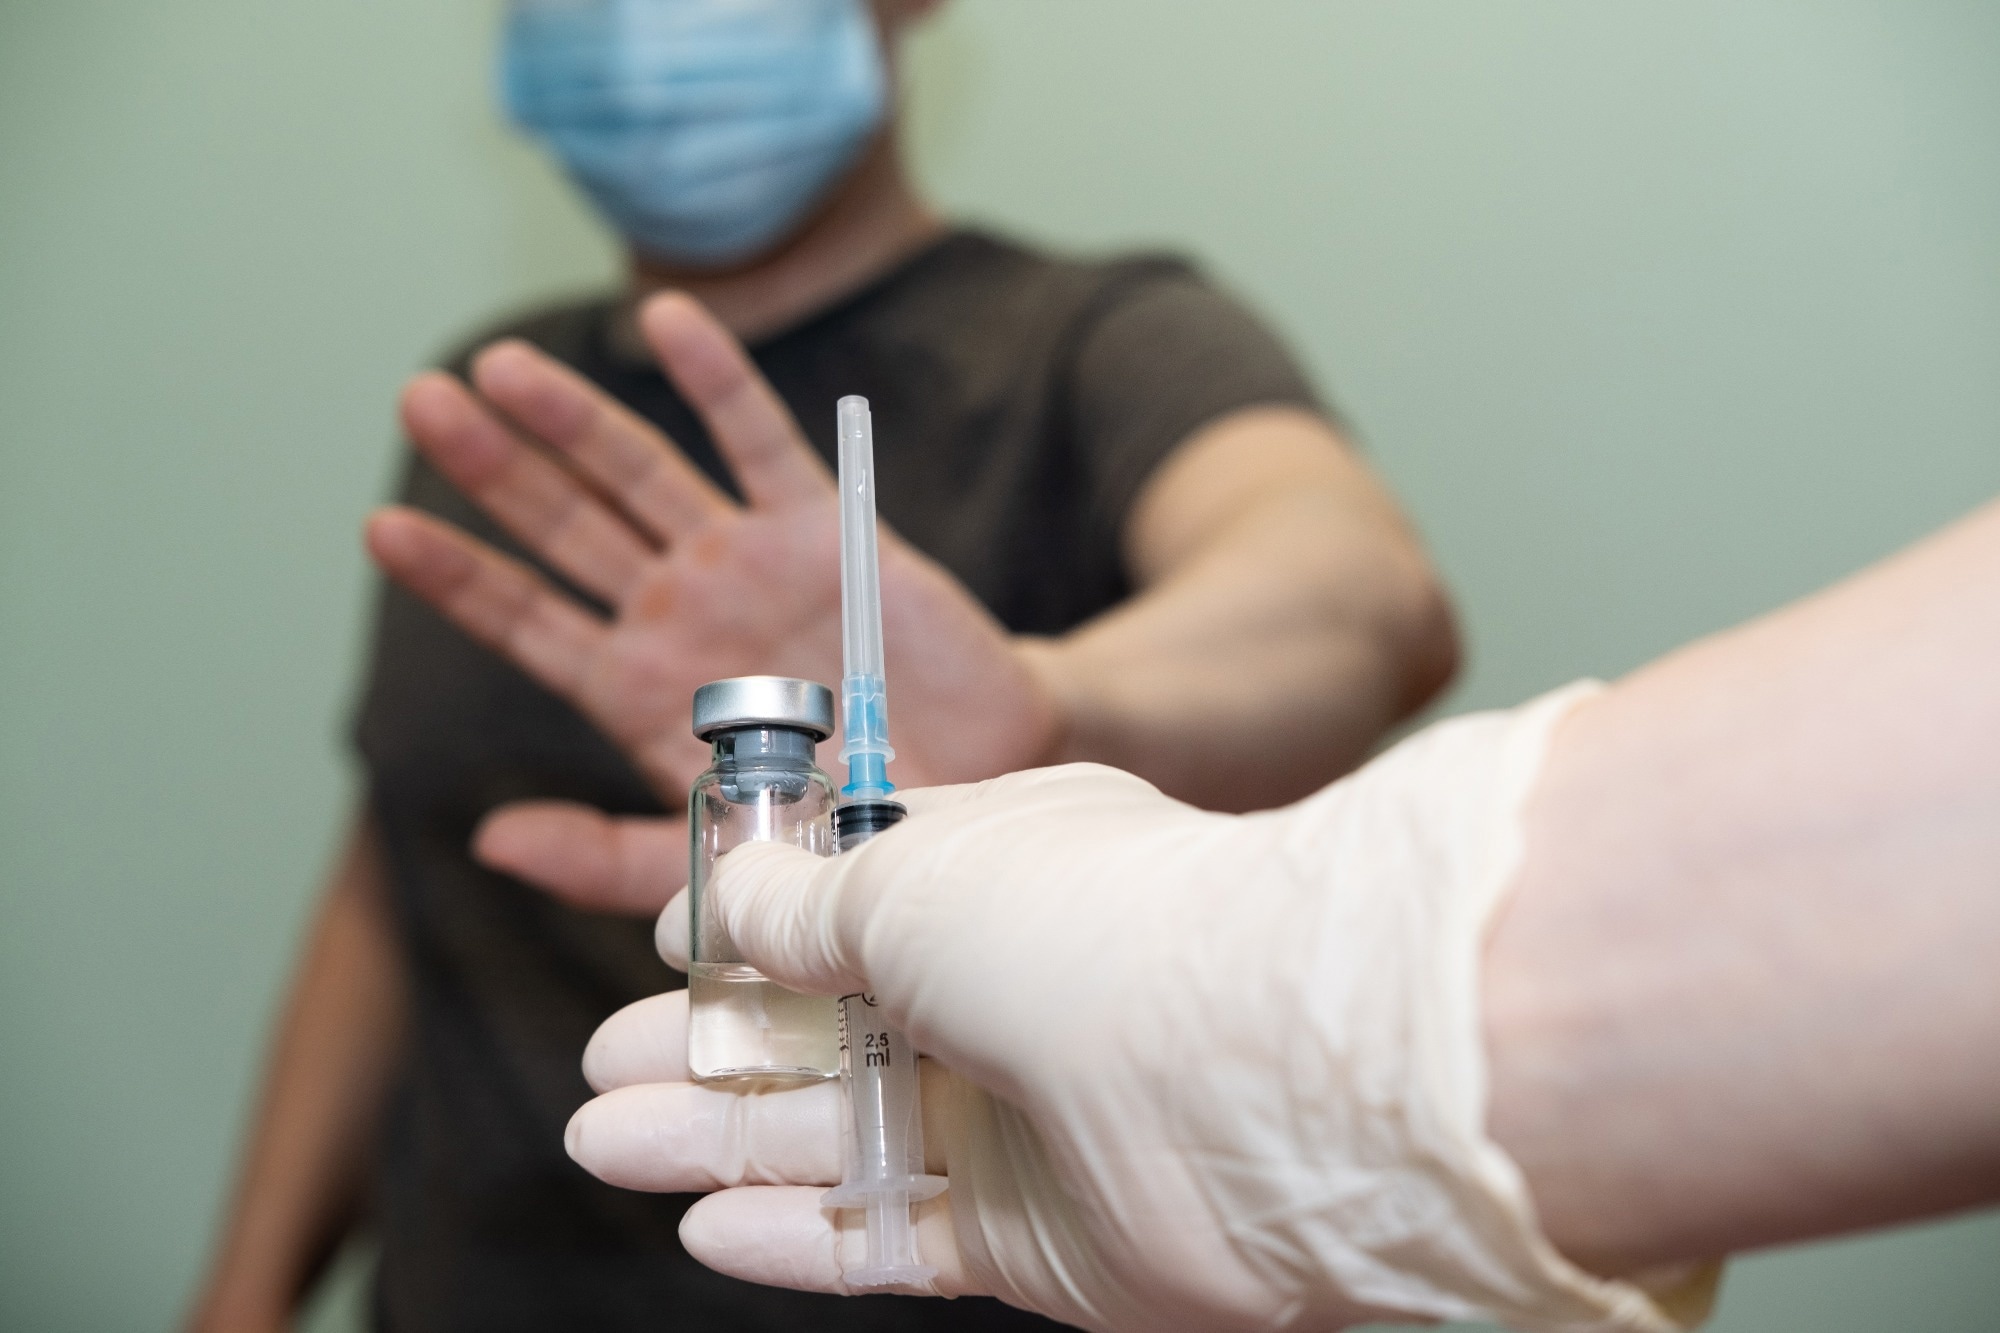 Study: COVID-19 Vaccination Willingness and Reasons for Vaccine Refusal. Image Credit: Anishka Rozhkova/Shutterstock.com